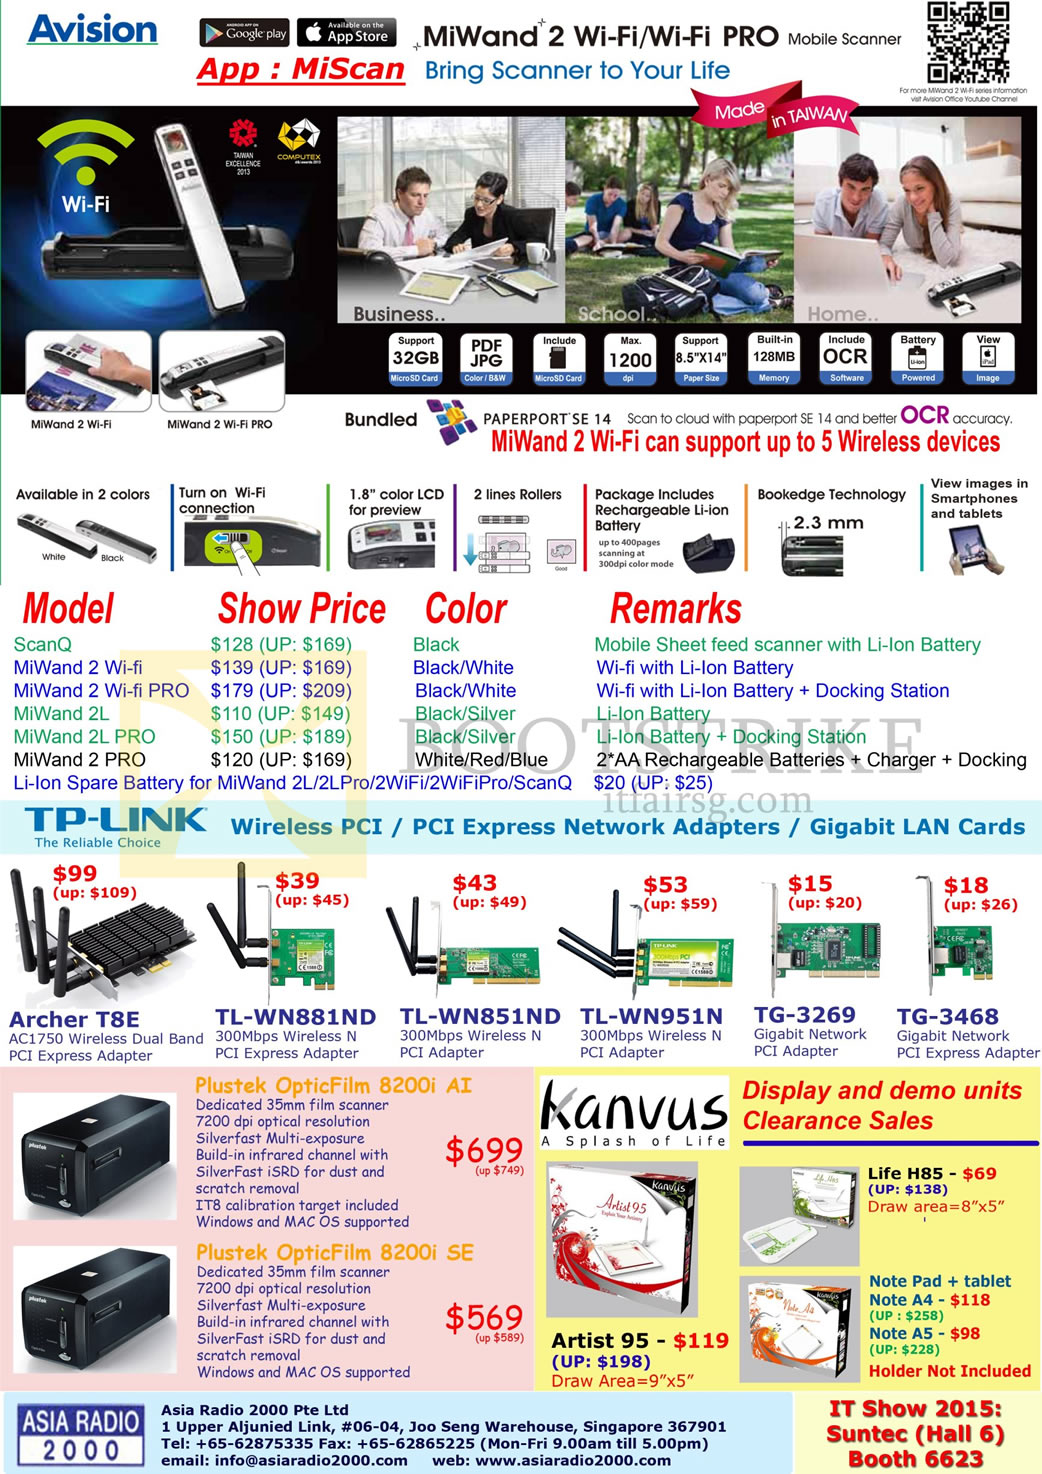 IT SHOW 2015 price list image brochure of Asia Radio Avision Scanner MiWand 2 Wi-fi Pro, ScanQ, Wireless PCI Express Gigabit Cards Archer, Plustek OpticFlim 8200i, Kanvus Artist 95, Life H85